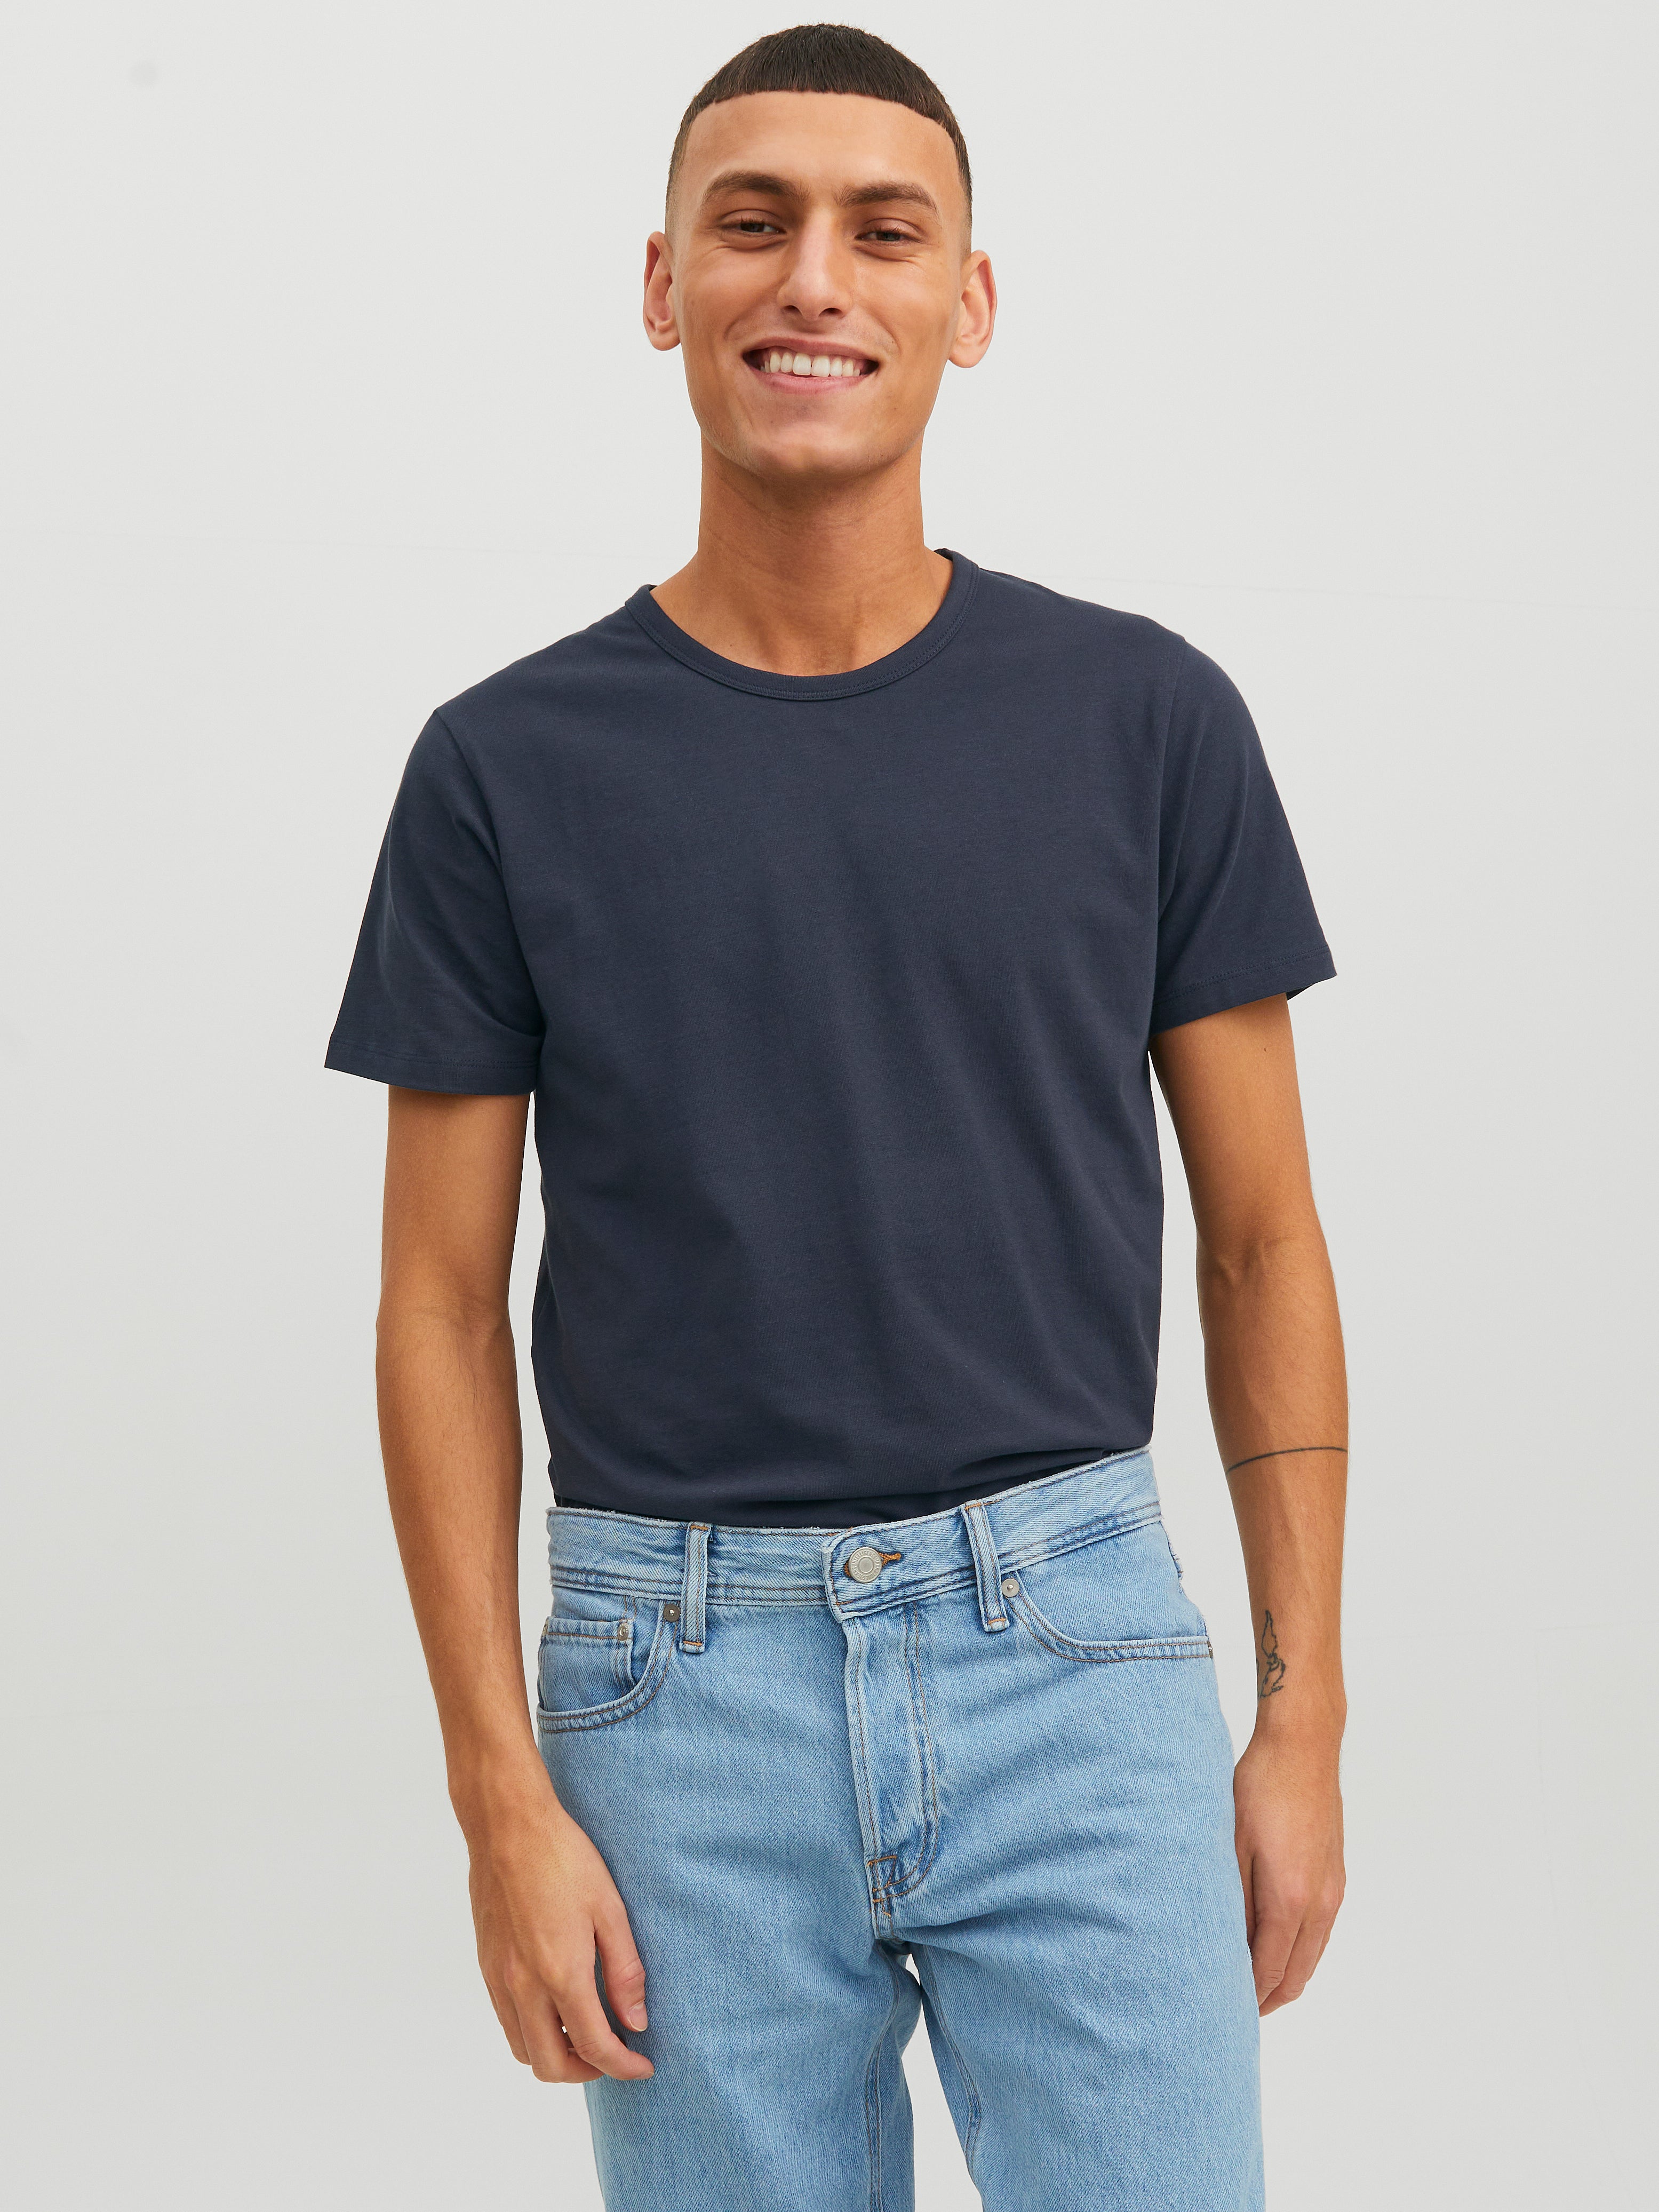 Rabatt 57 % Grau L HERREN Hemden & T-Shirts Casual Jack & Jones T-Shirt 